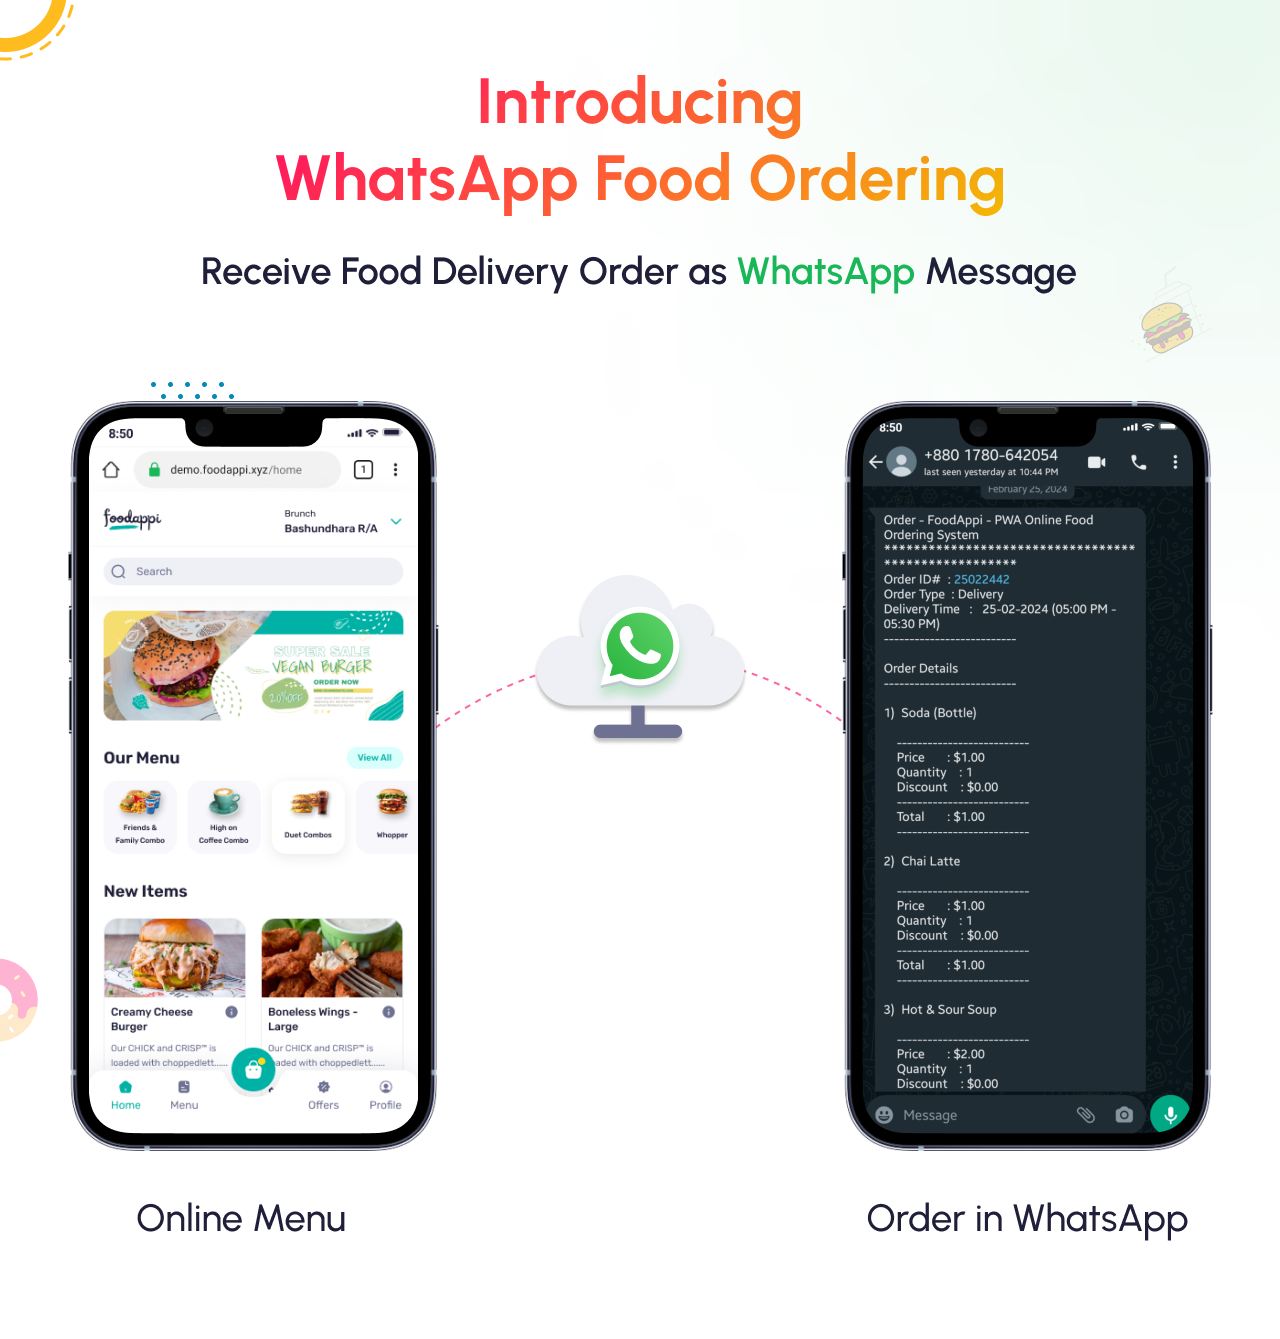 FoodAppi WhatsApp menu ordering